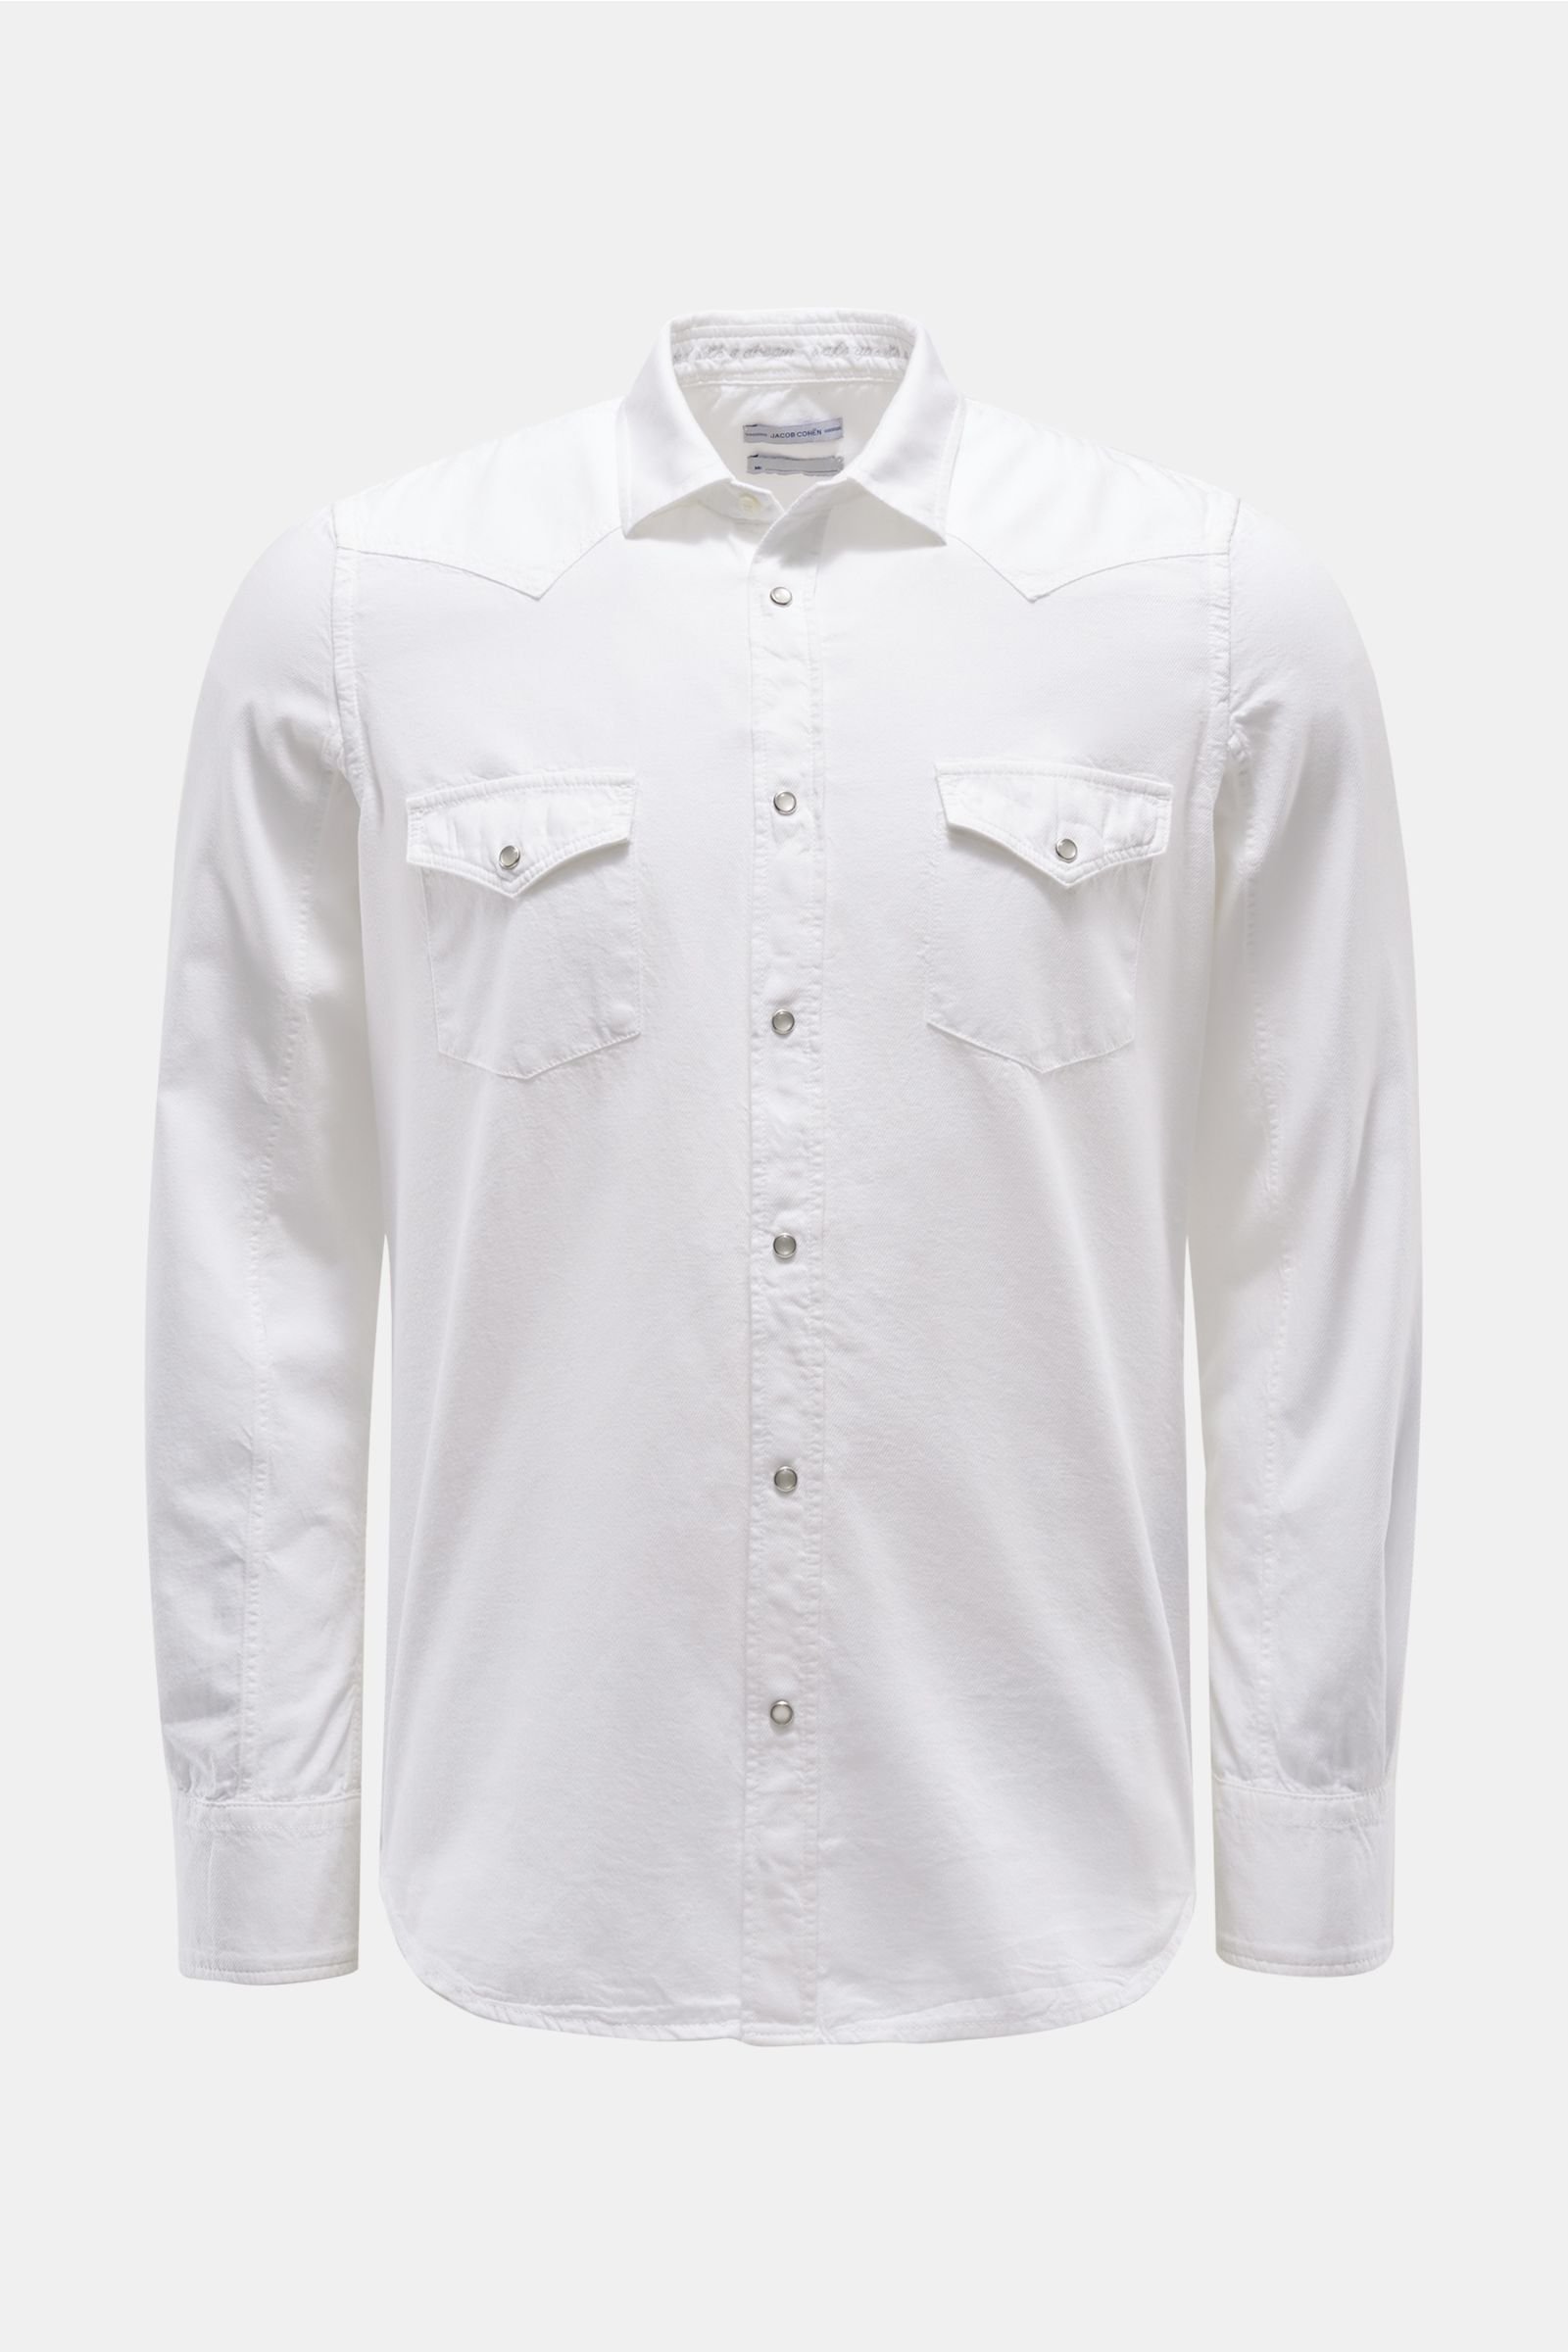 Denim shirt narrow collar white